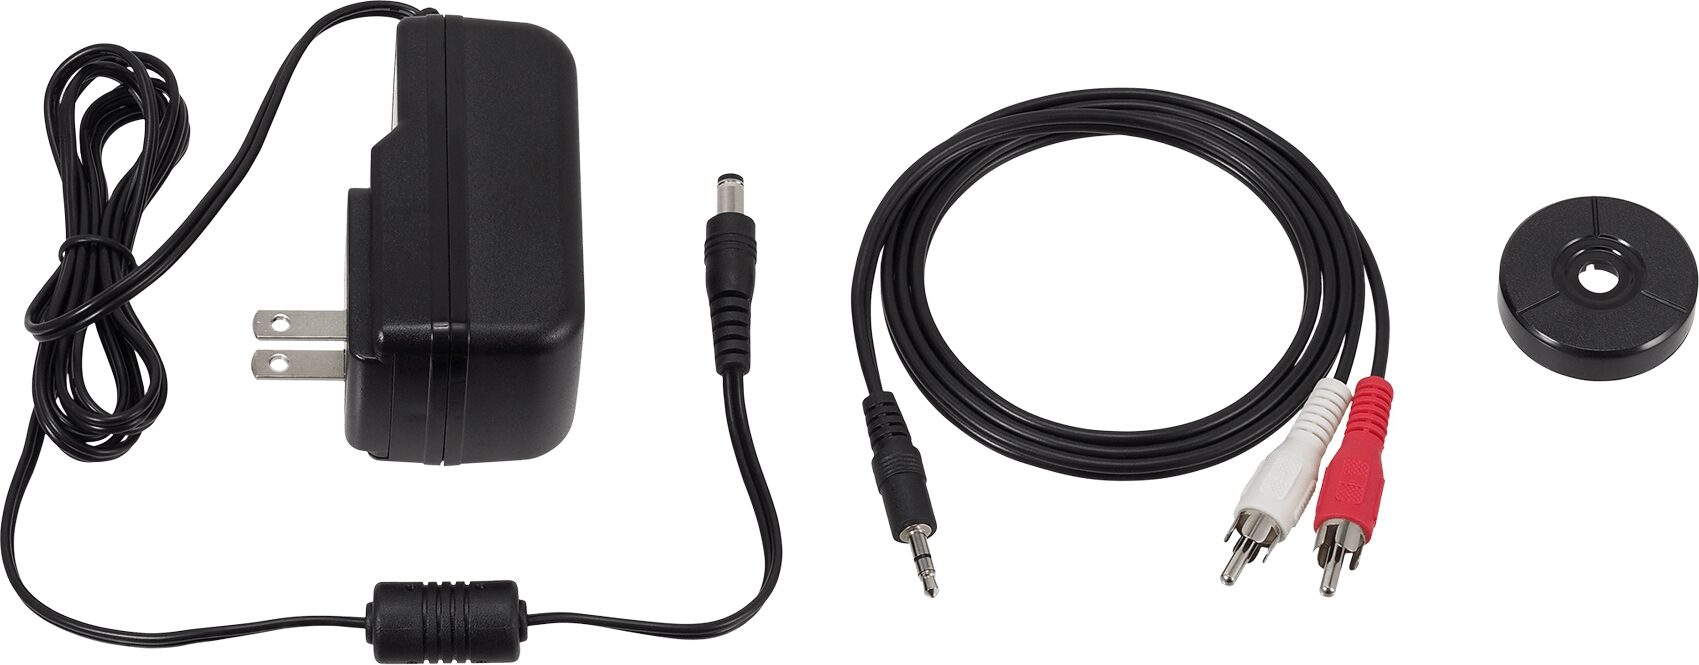 Audio-Technica AT-LP60XBT-WW Bluetooth Turntable